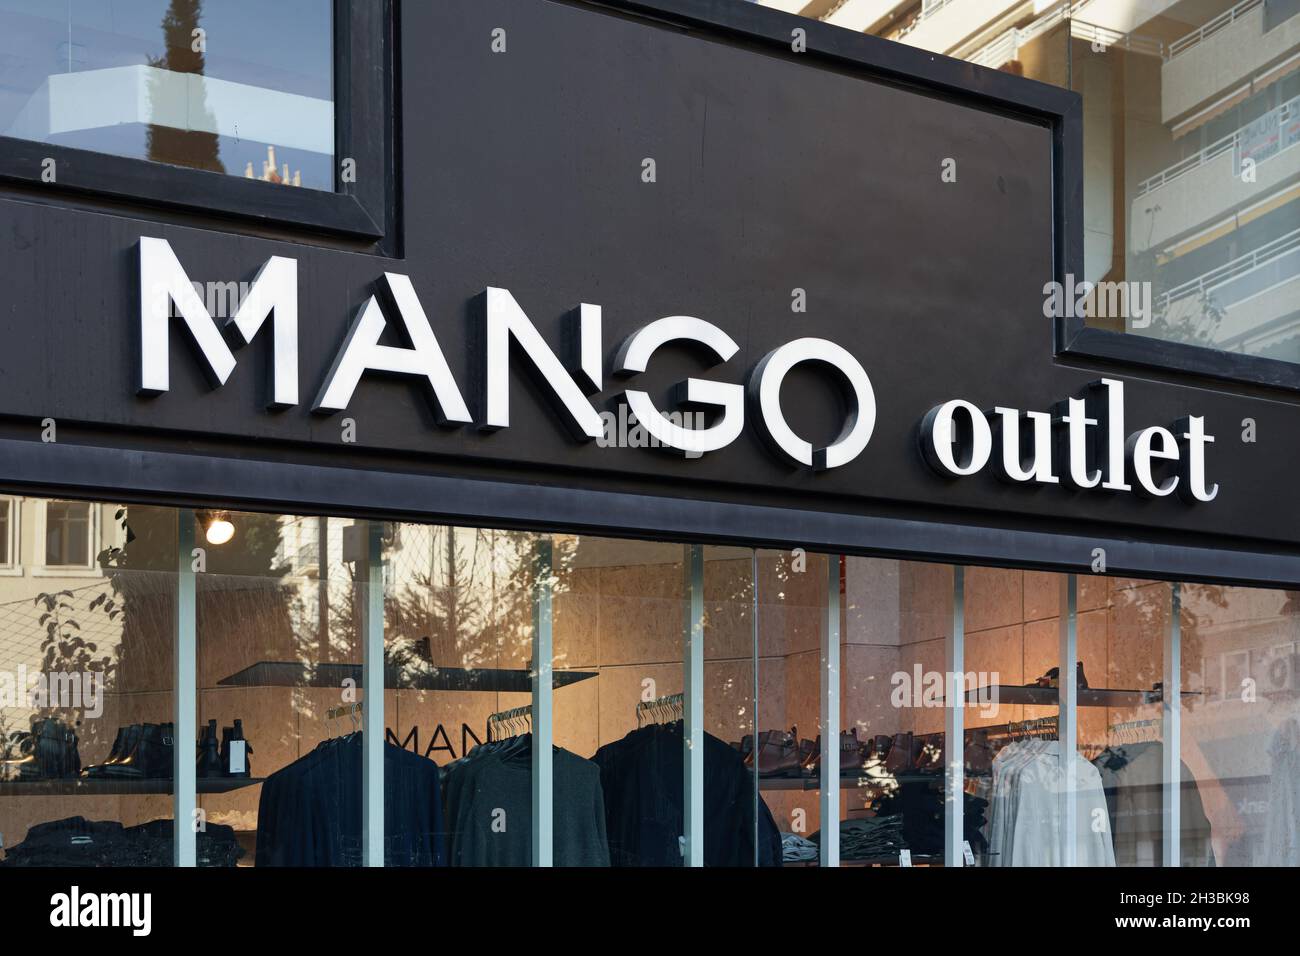 Mango outlet Immagini e Fotos Stock - Alamy